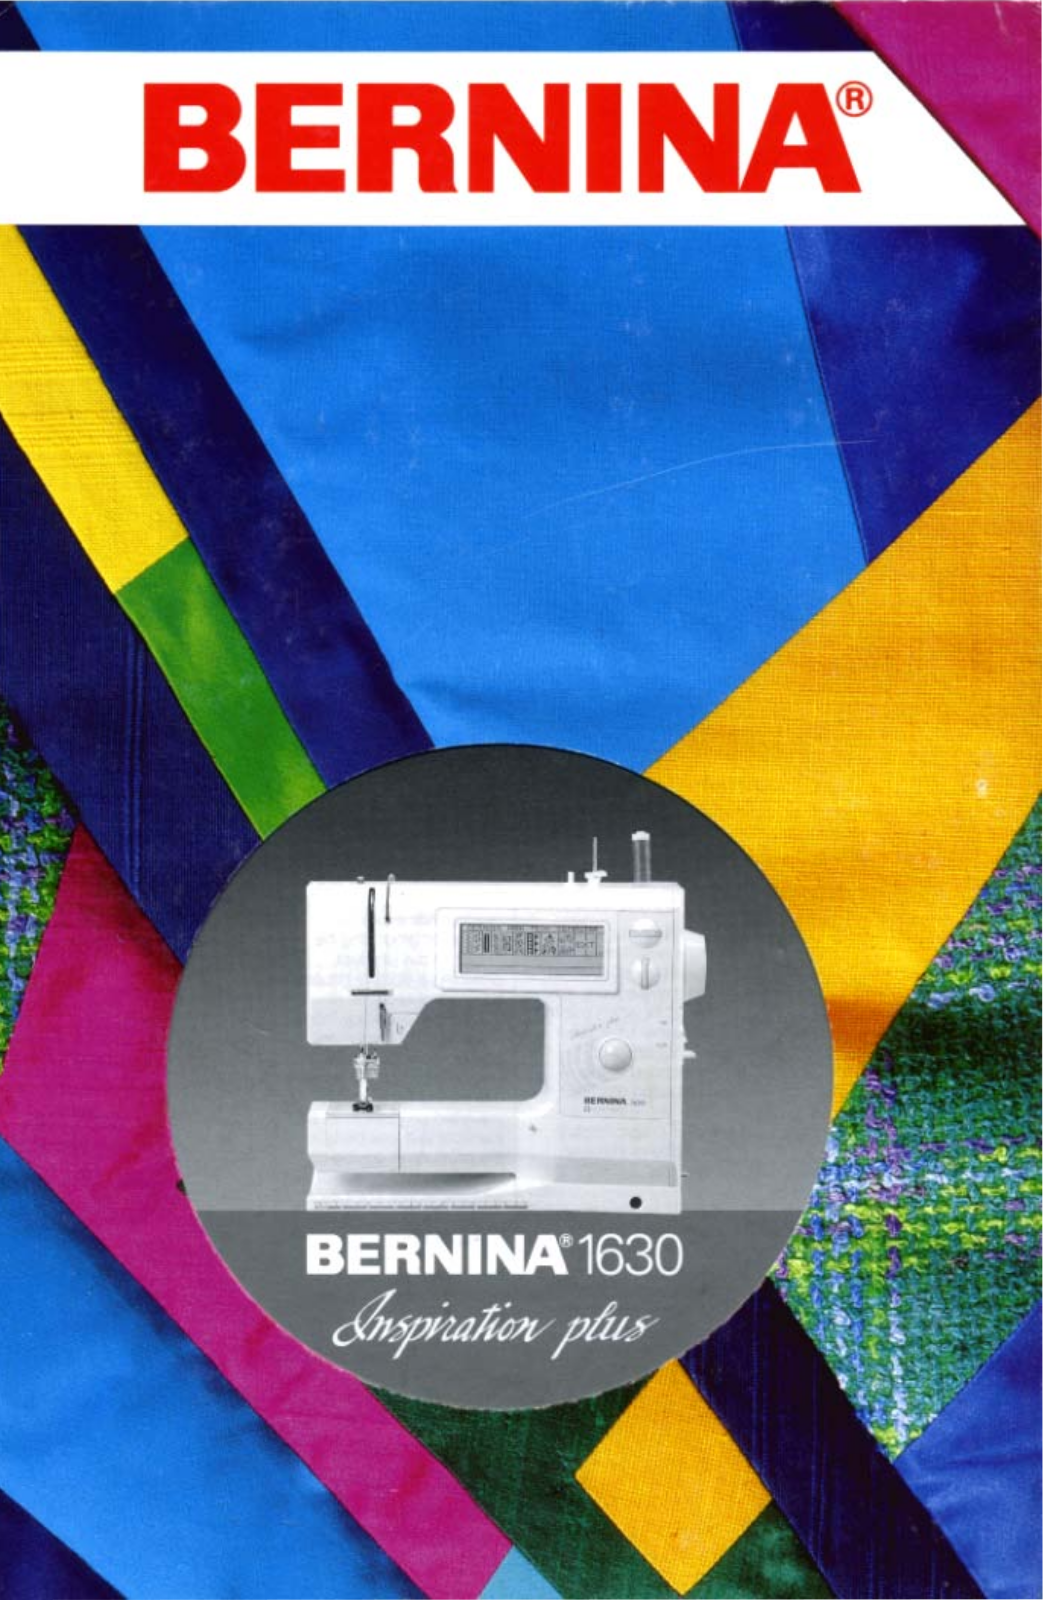 Bernina 1630 INSPIRATION PLUS Manual